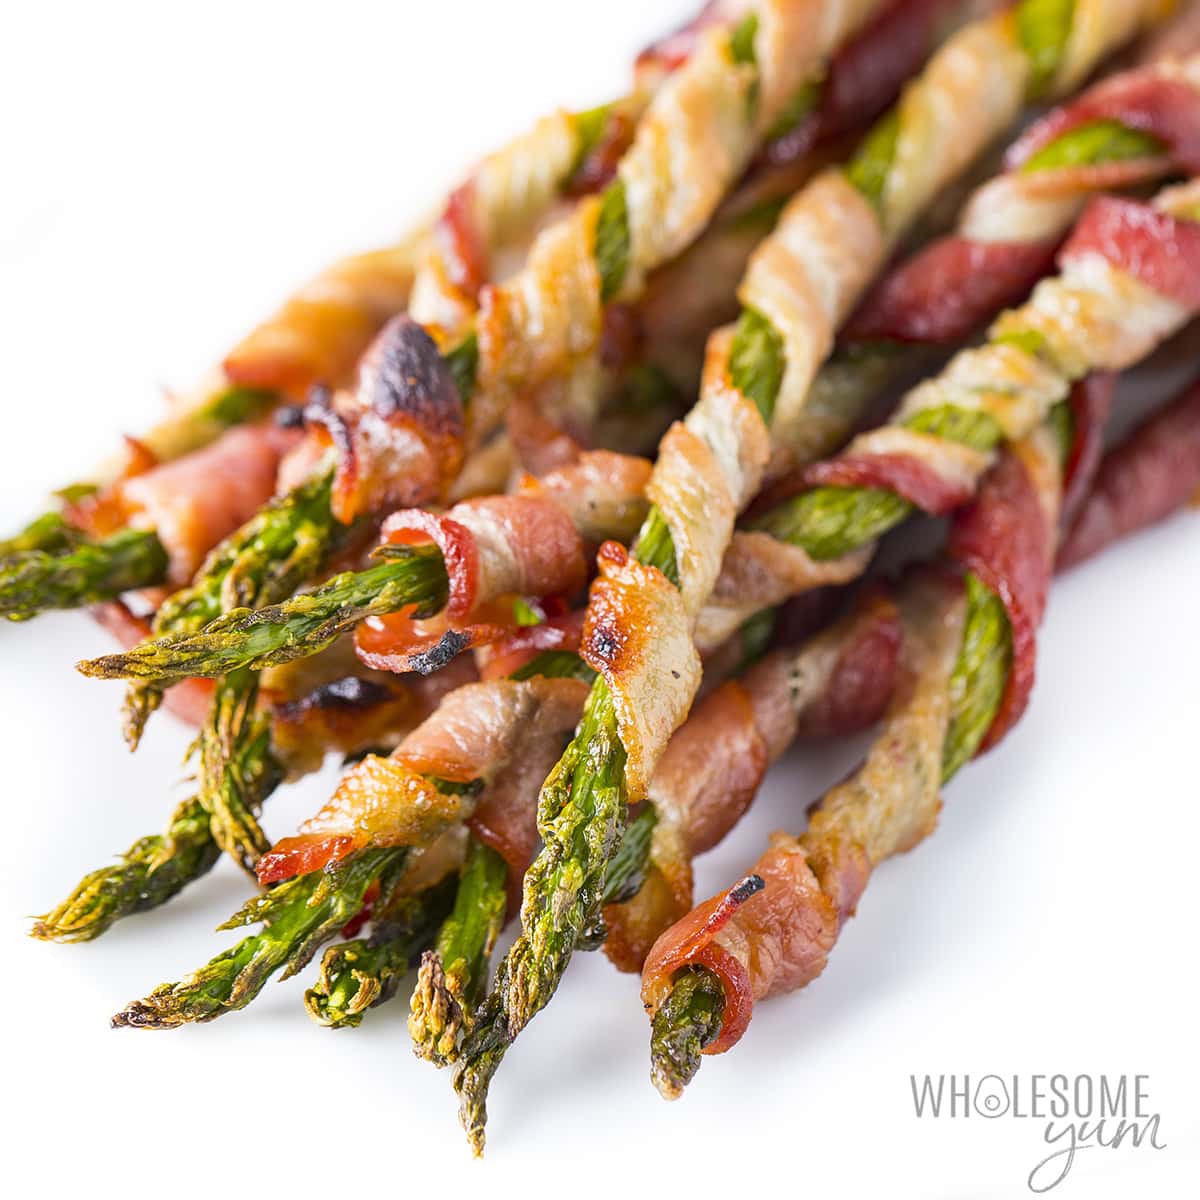 Bacon wrapped asparagus recipe close up.